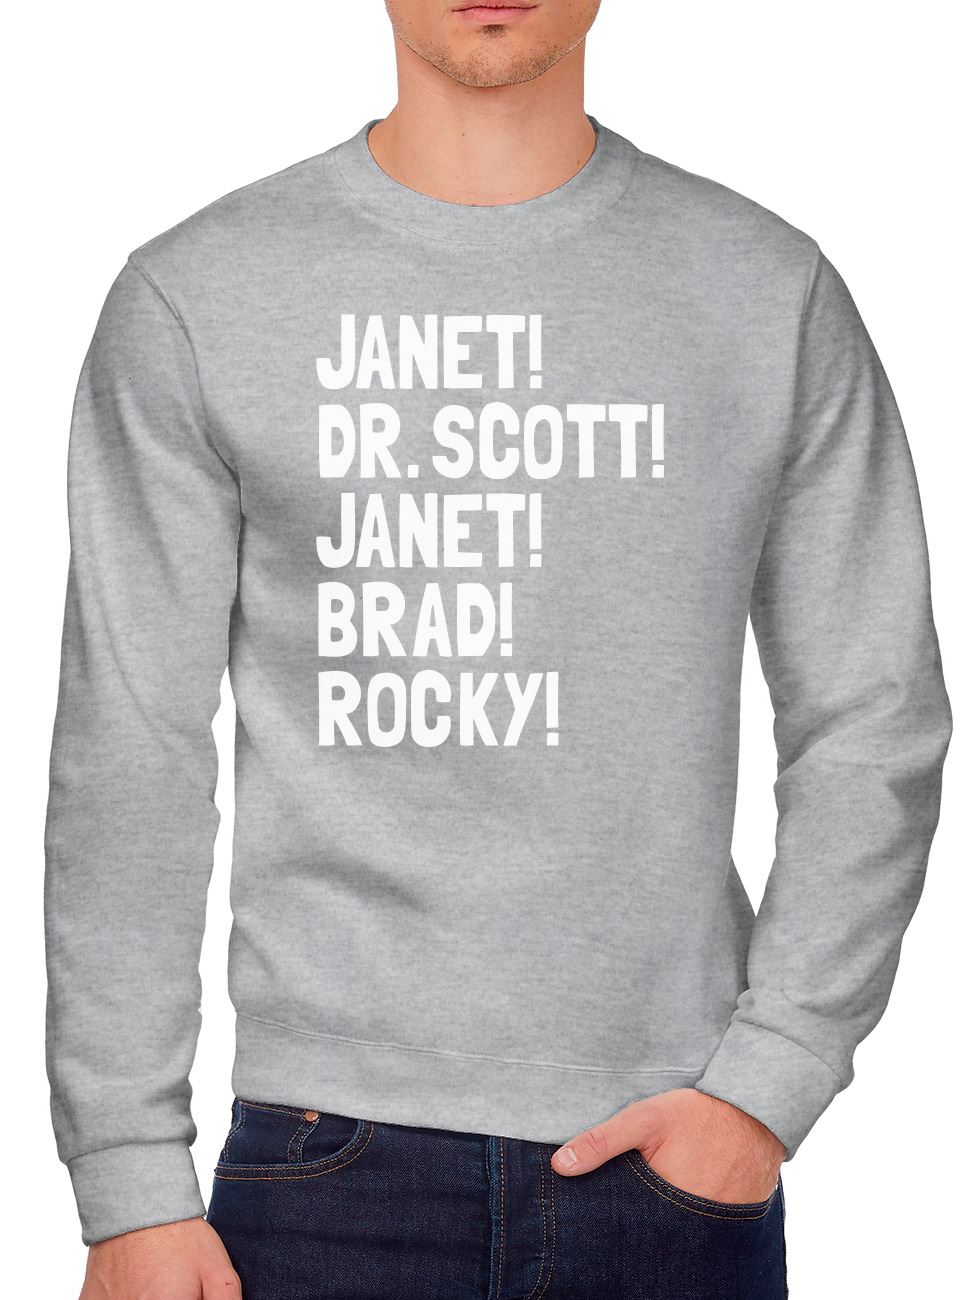 Janet! Dr. Scott! Janet! Brad! Rocky! - Youth & Mens Sweatshirt